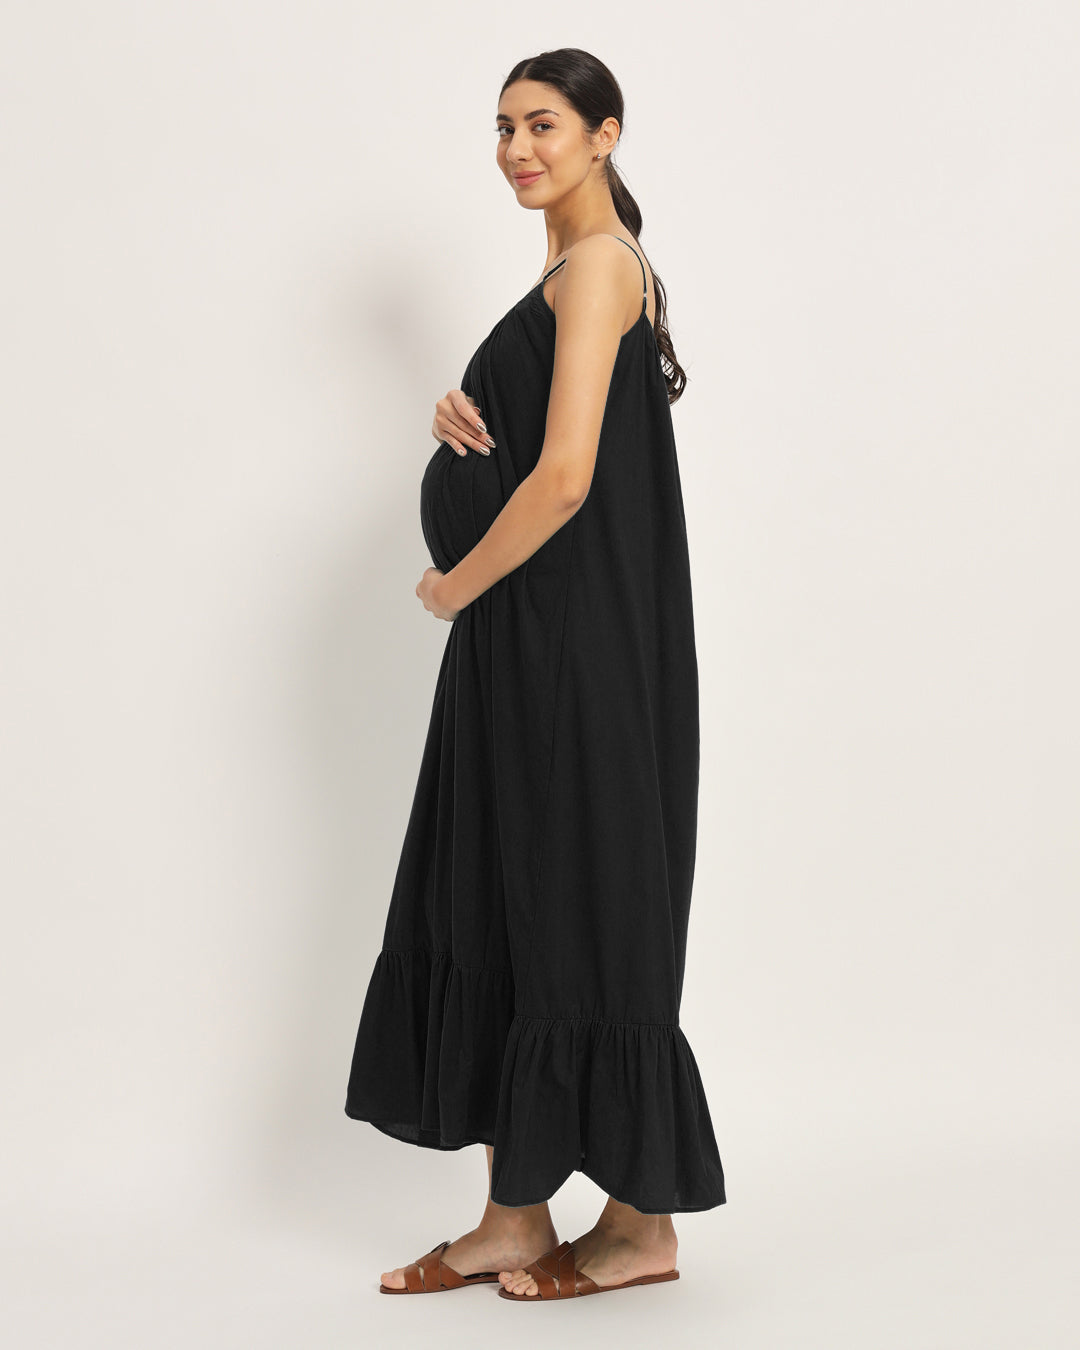 Classic Black Belly Laugh Maternity & Nursing Dress